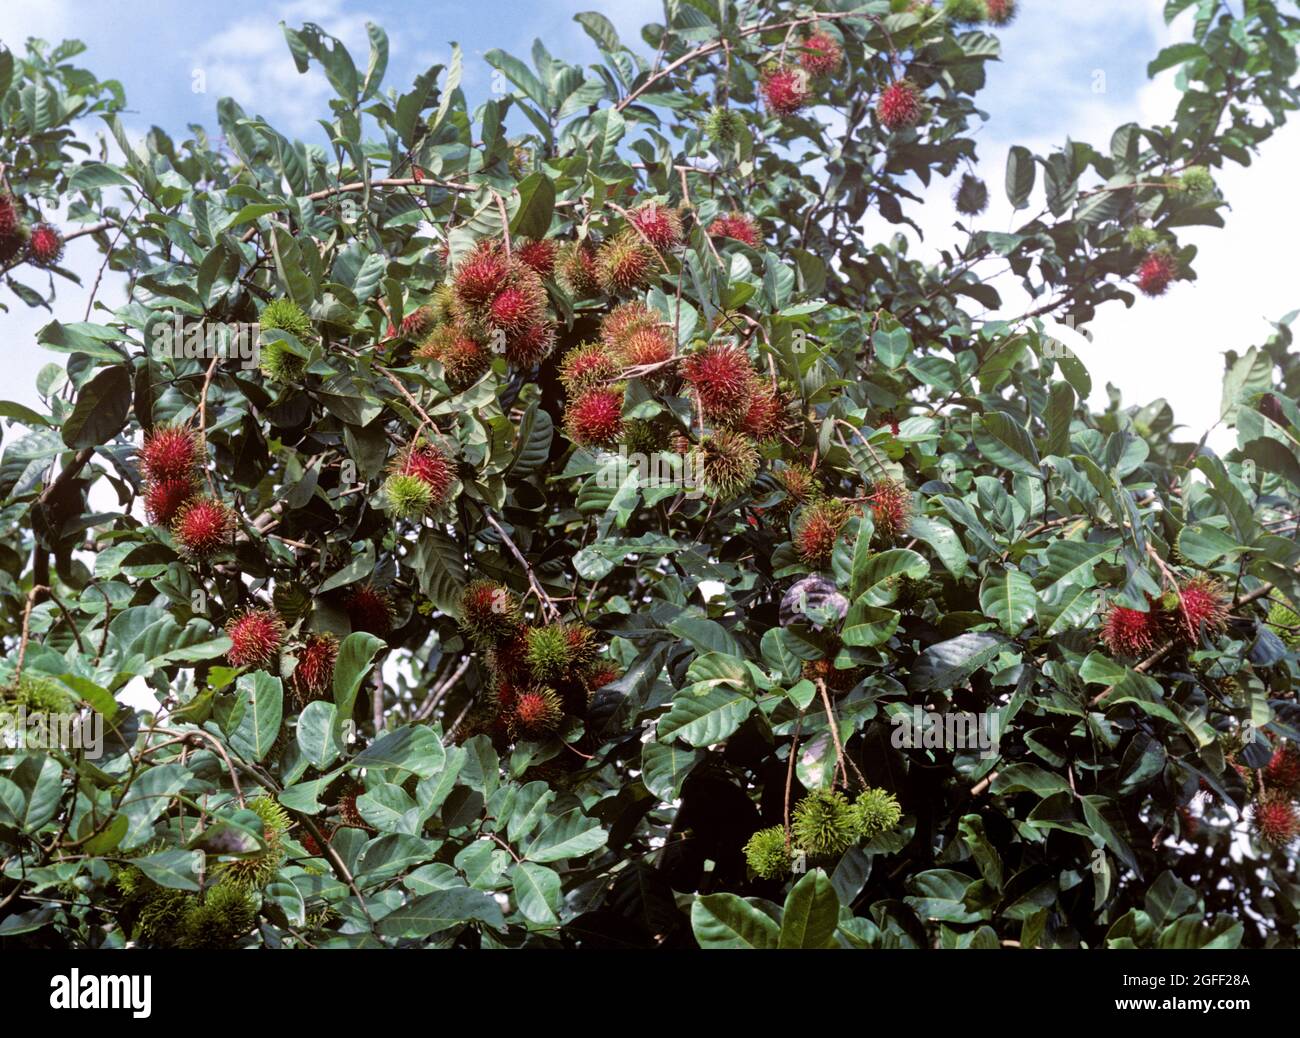 Fruits de rambutan comestibles rouges mûrs sur l'arbre, Thaïlande Banque D'Images